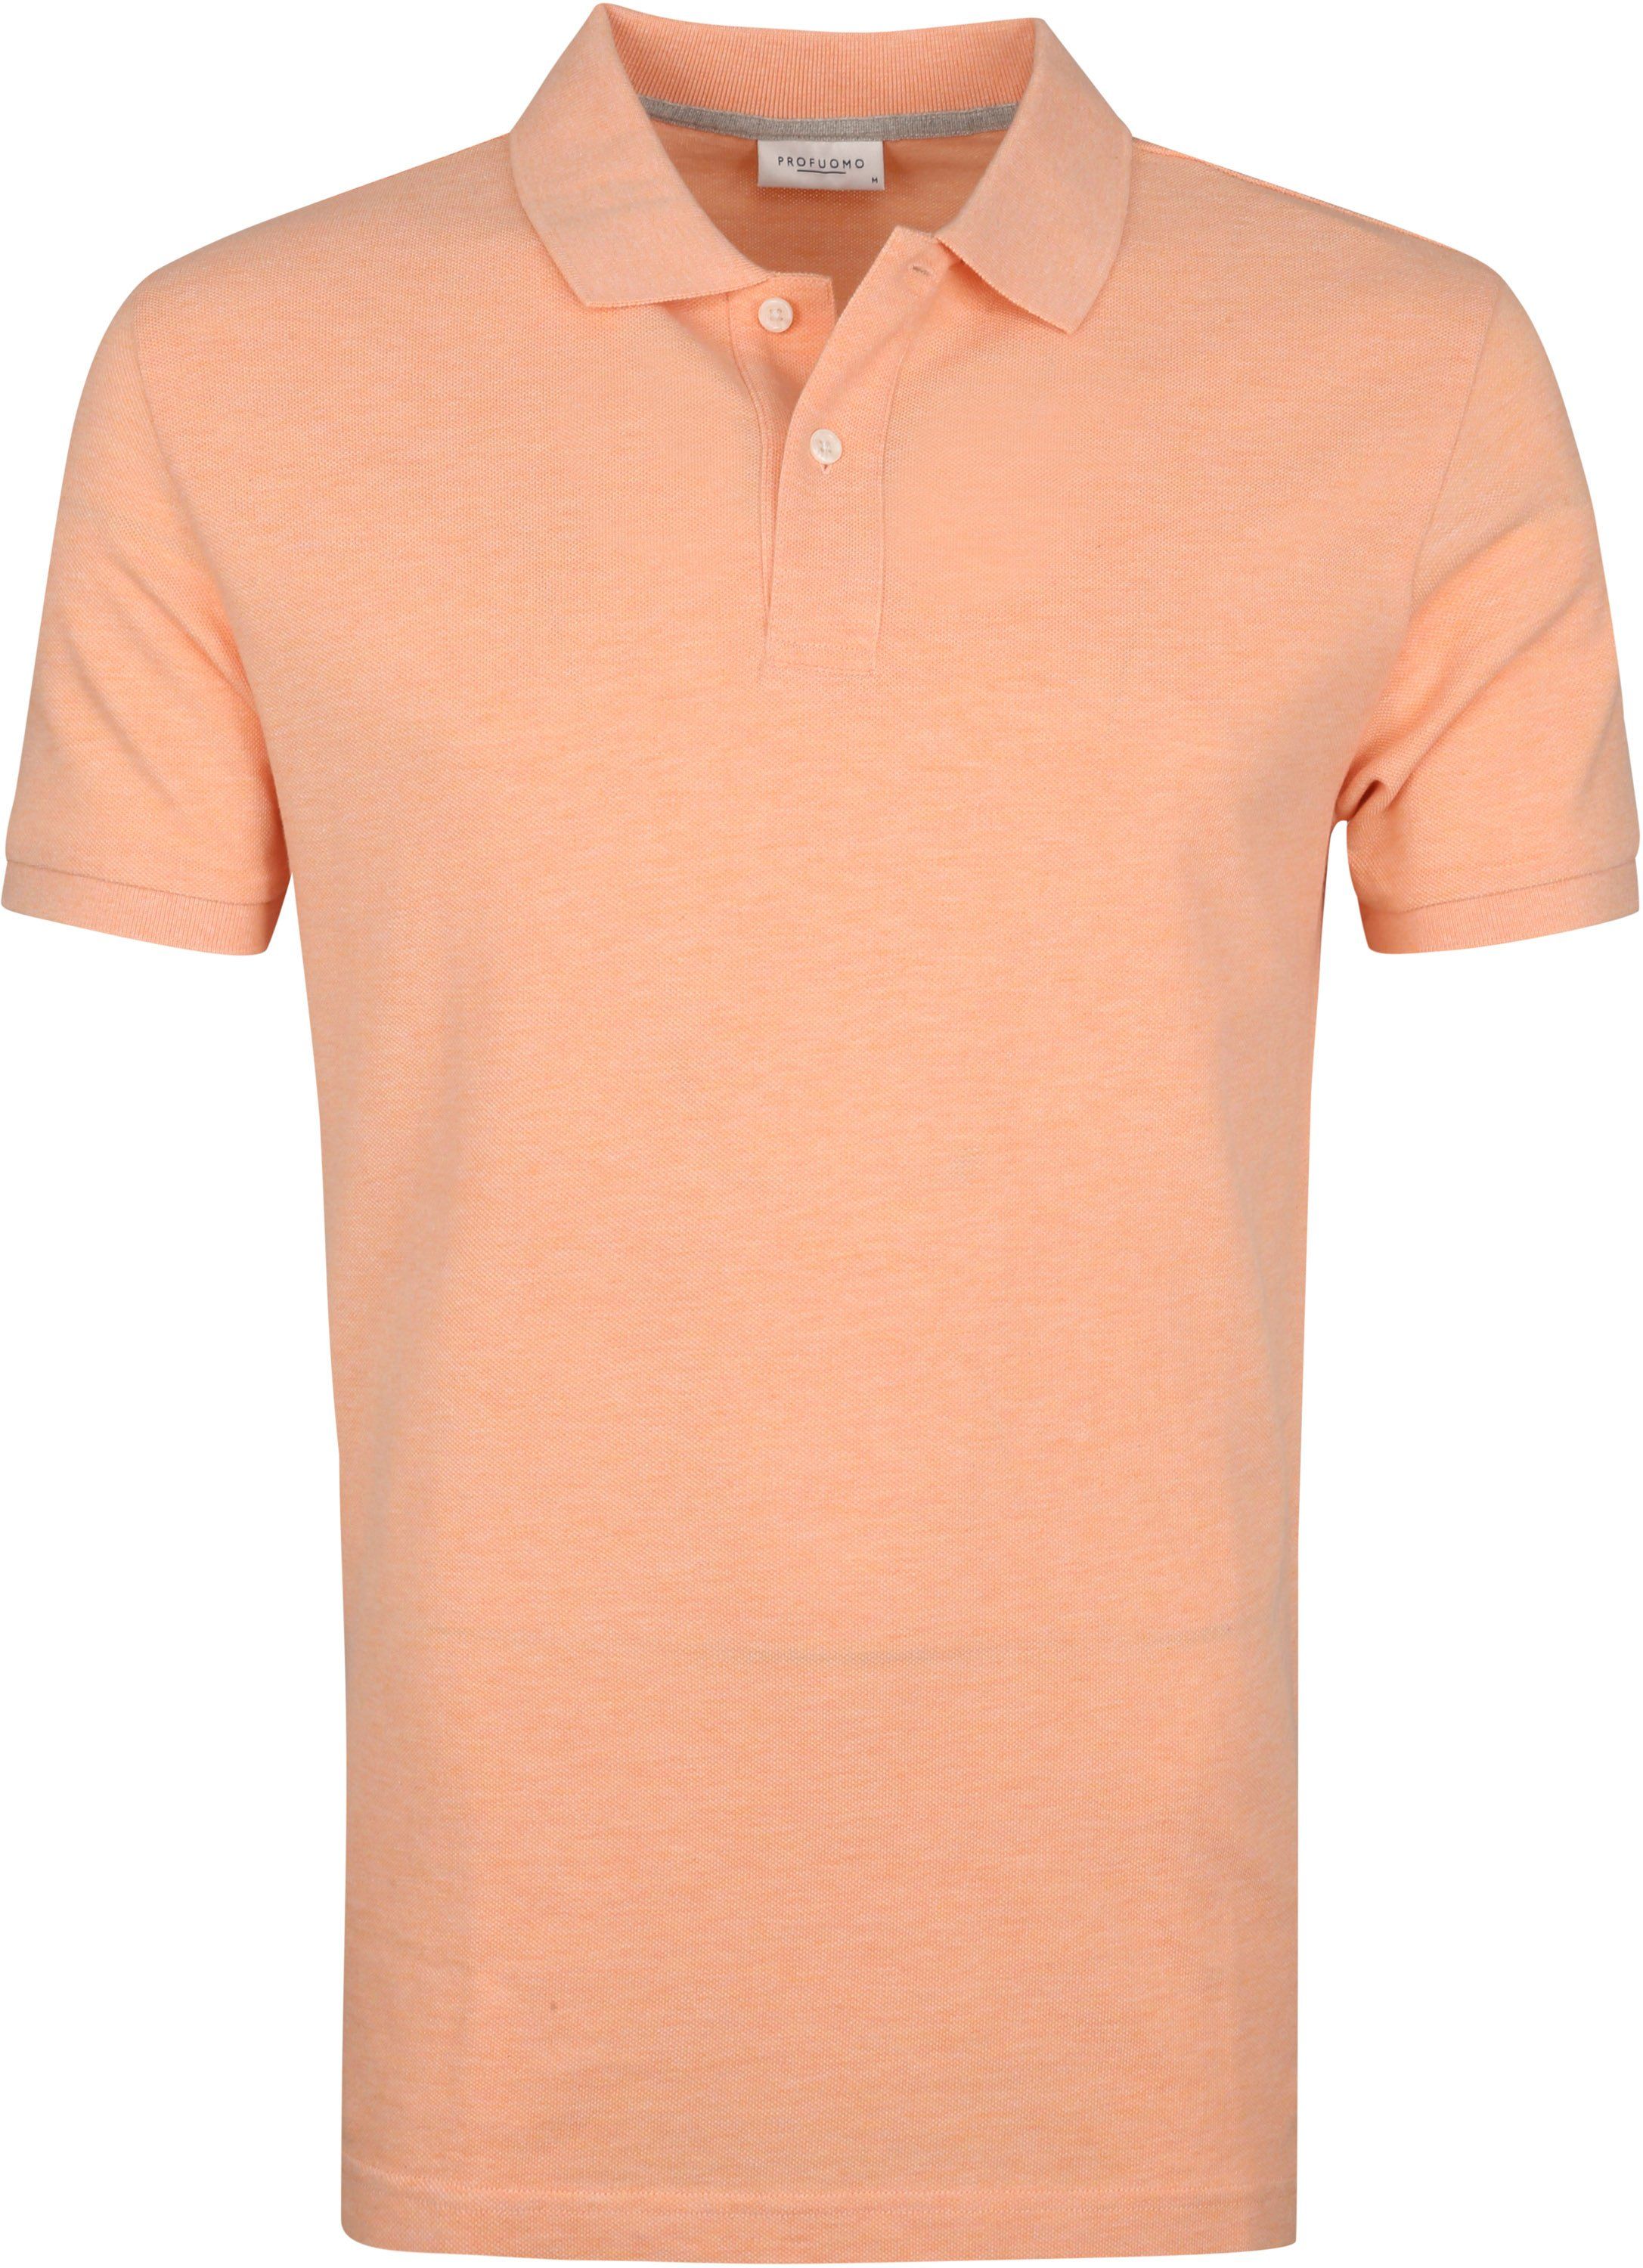 Profuomo Pique Polo Shirt Orange size L